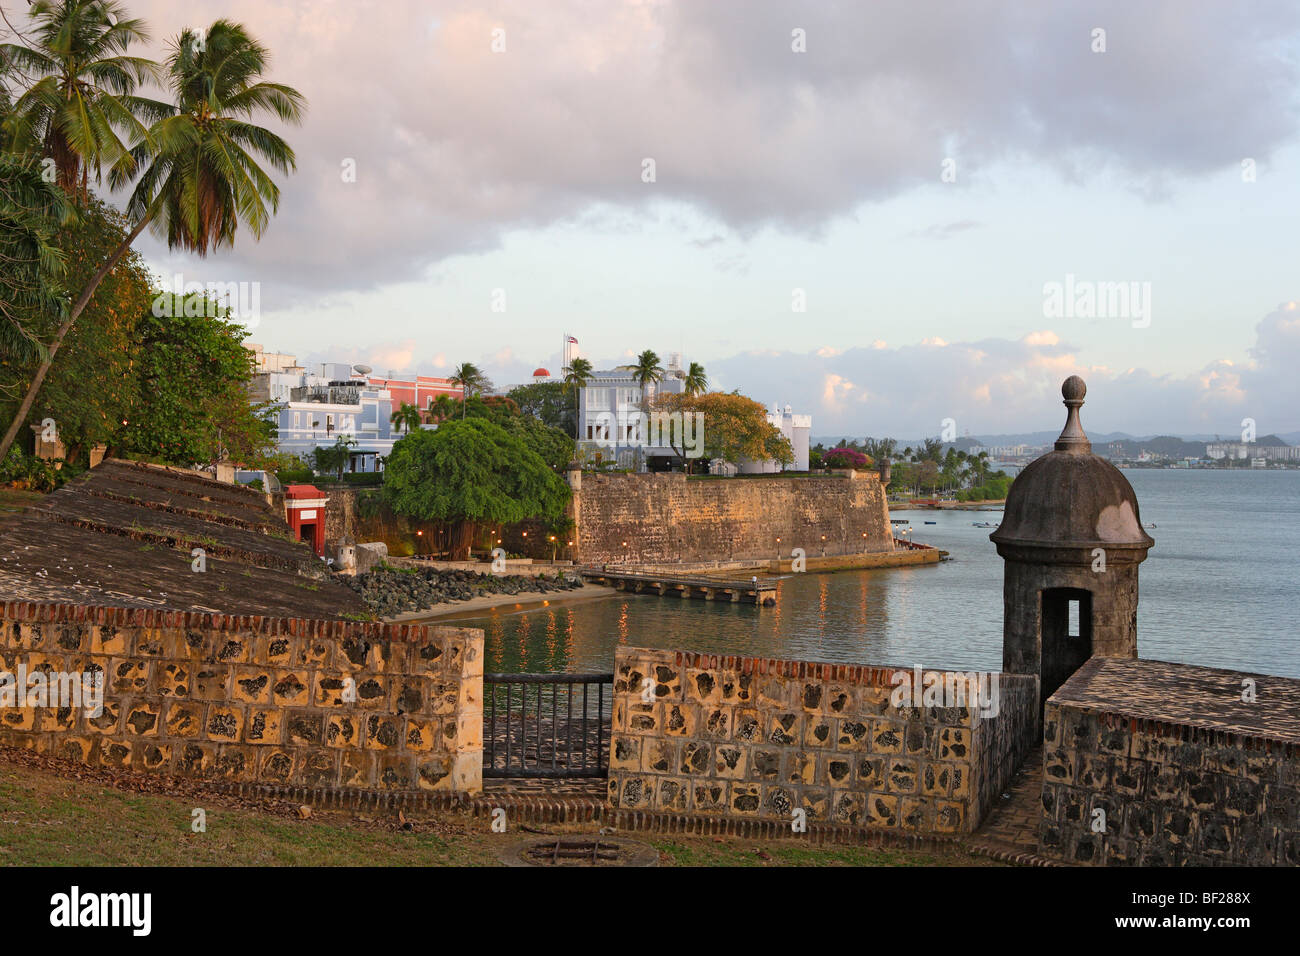 La storica città vecchia sotto il cielo nuvoloso, Puerta de San Juan, San Juan, Puerto Rico, Caraibi, America Foto Stock